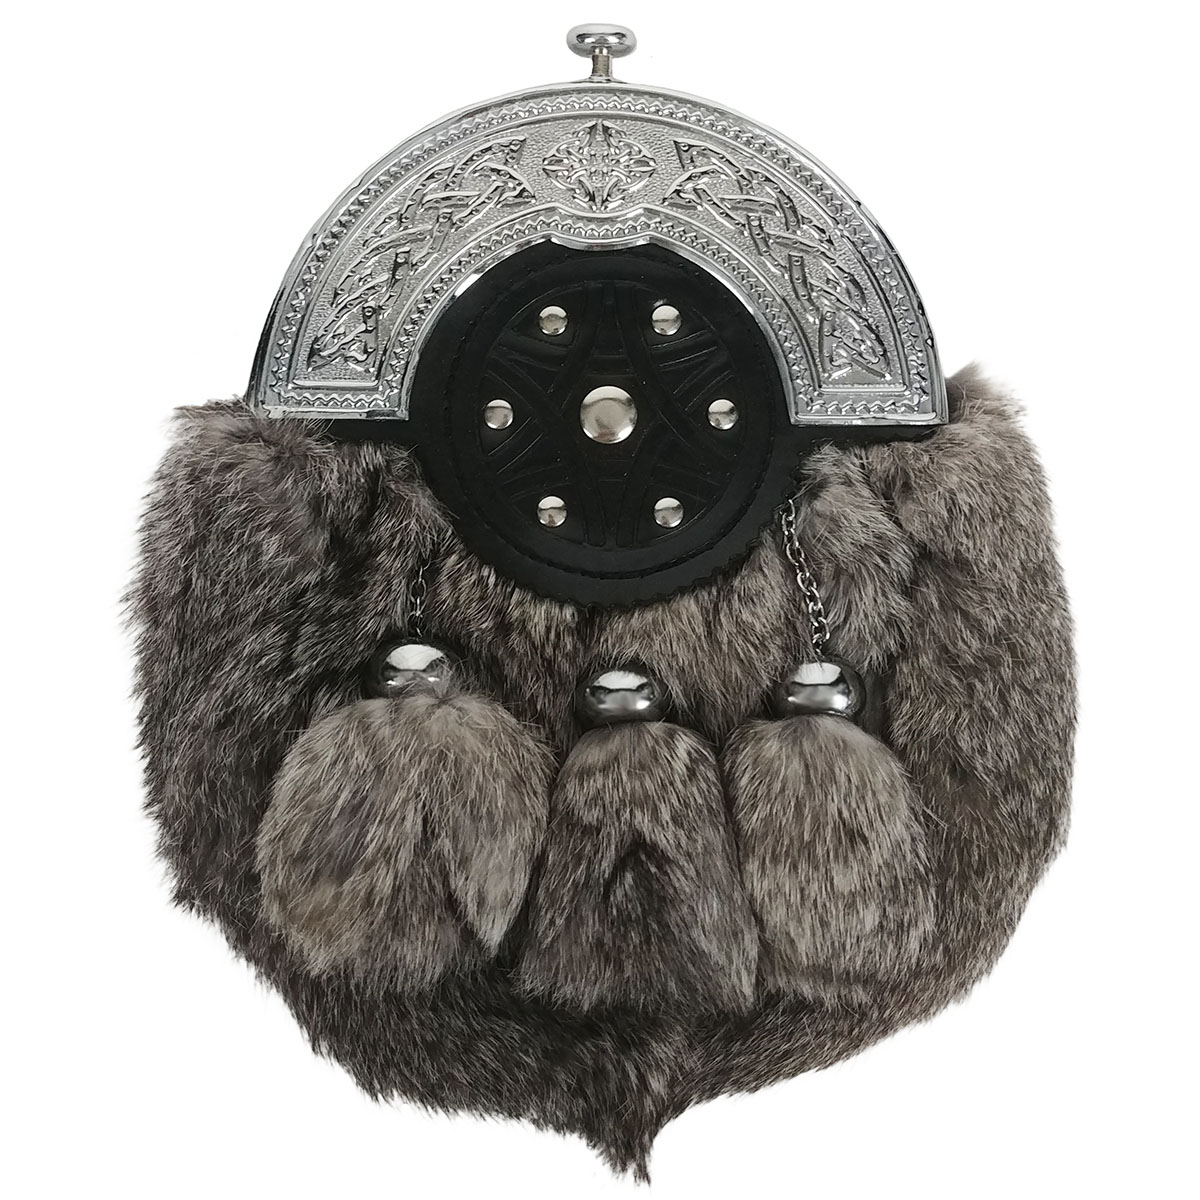 Scottish Semi Dress Grey Rabbit Fur Kilt Sporran with Chain Belt.Masonic Badge.